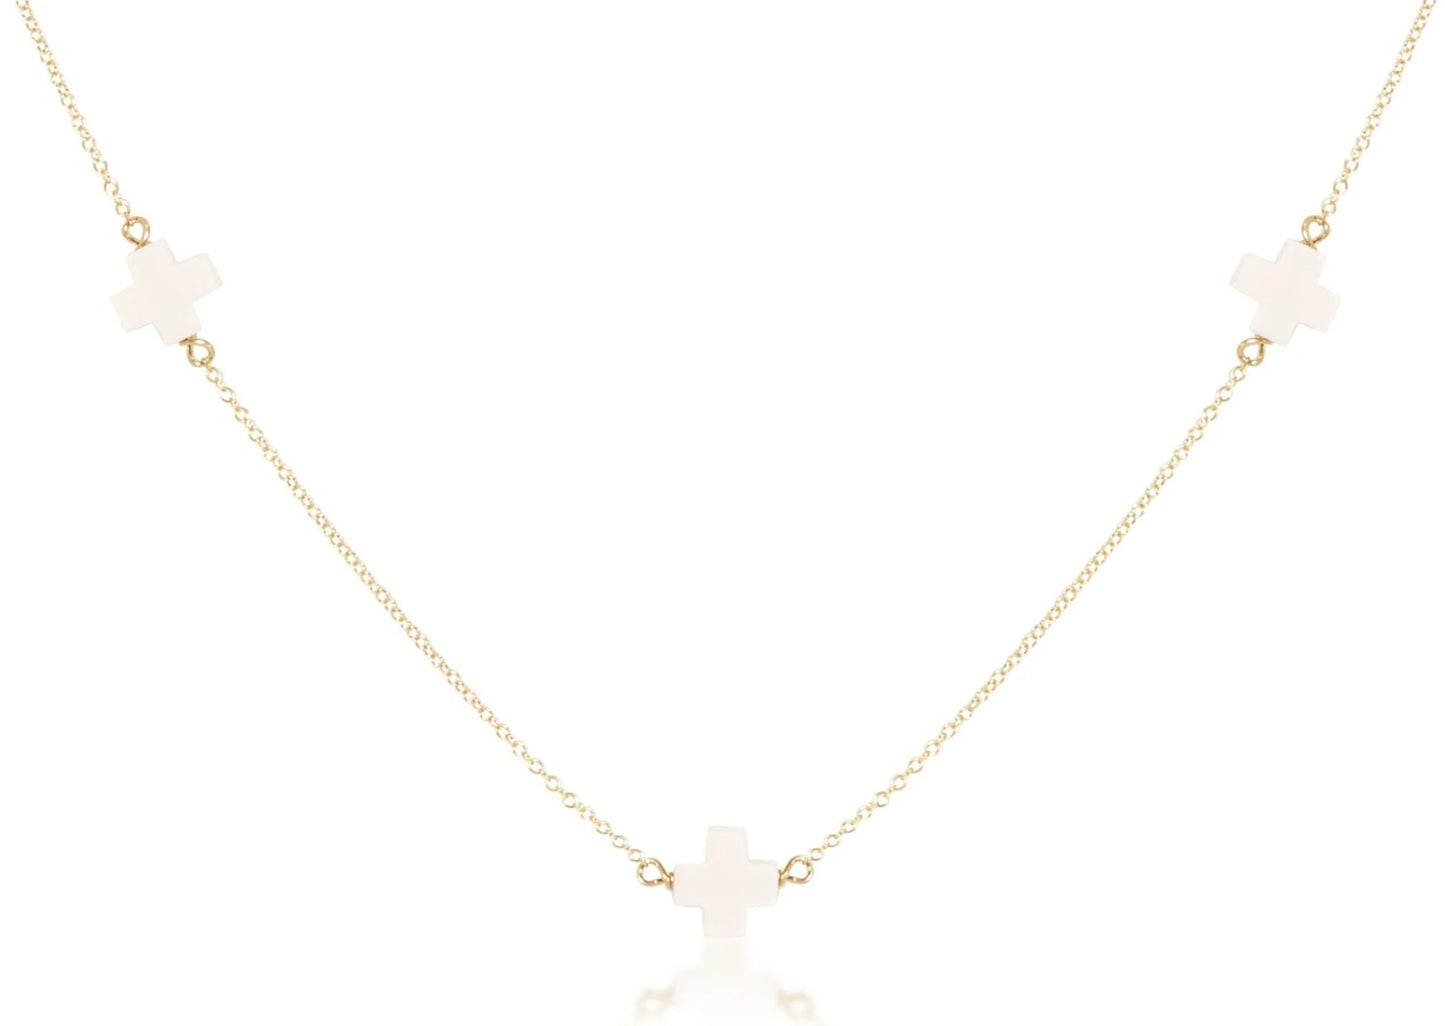 15" Choker Simplicity Chain Gold - Signature Cross Off White